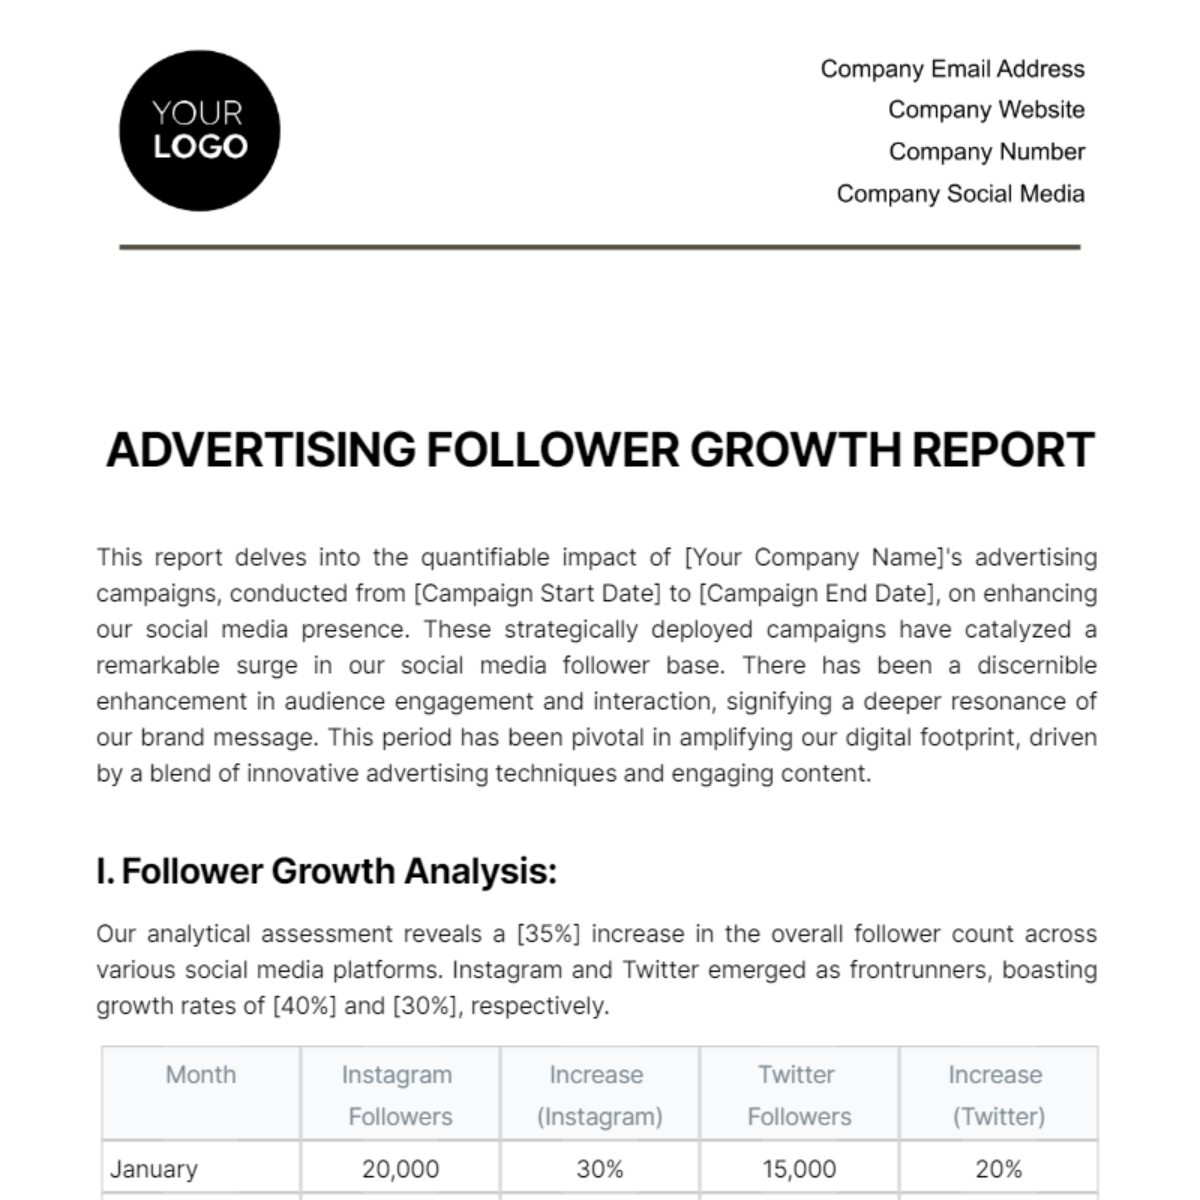 Advertising Follower Growth Report Template